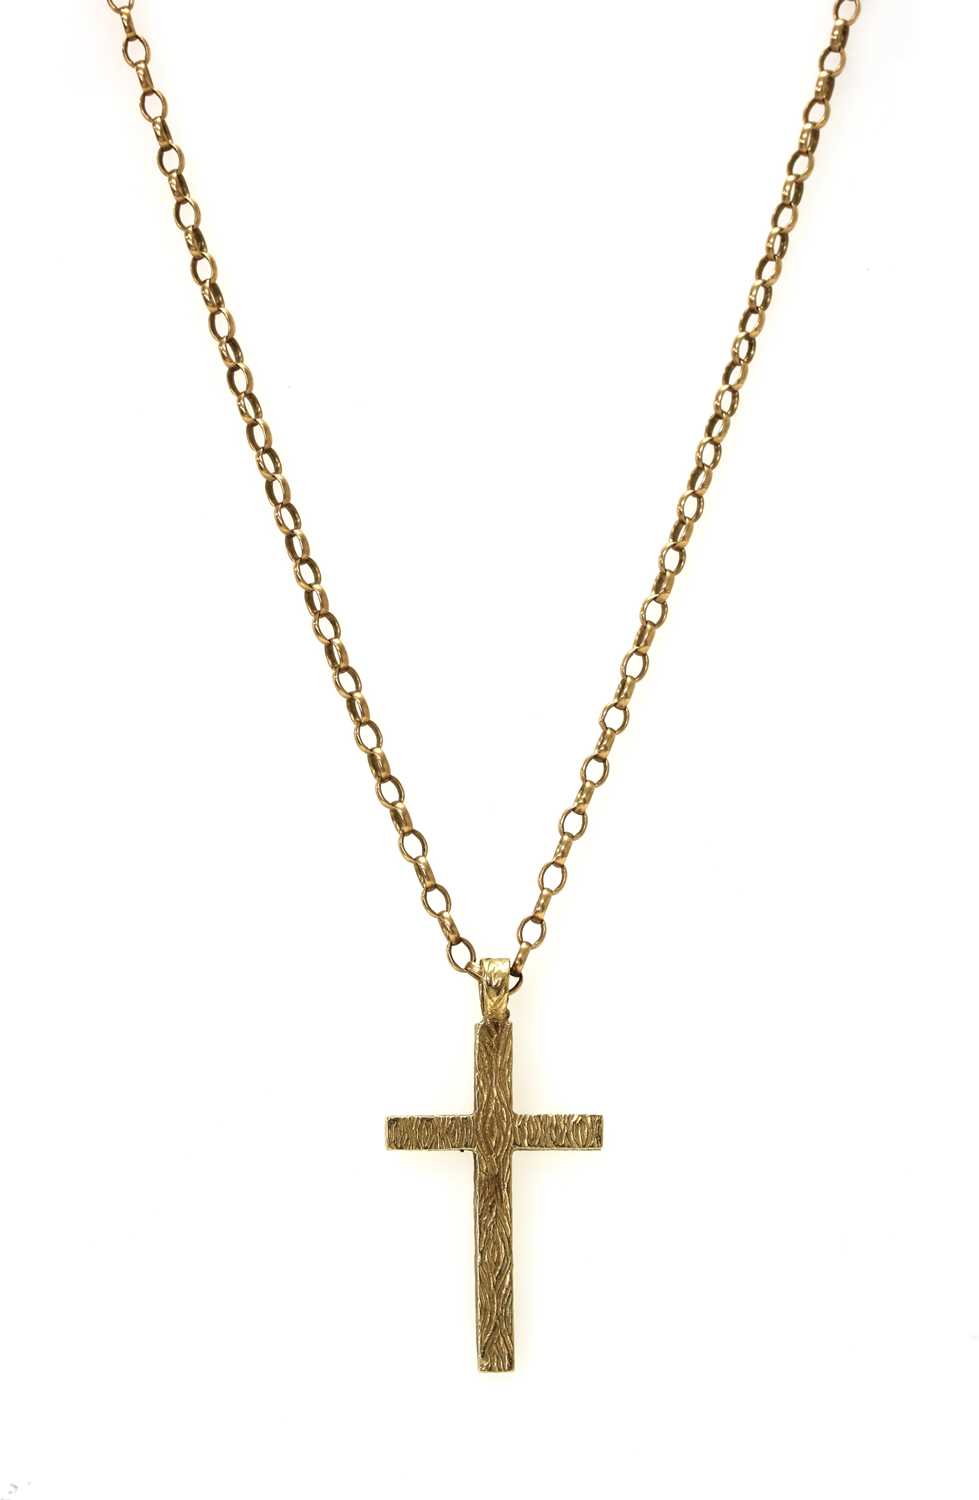 Lot 1147 - A 9ct gold Latin cross pendant